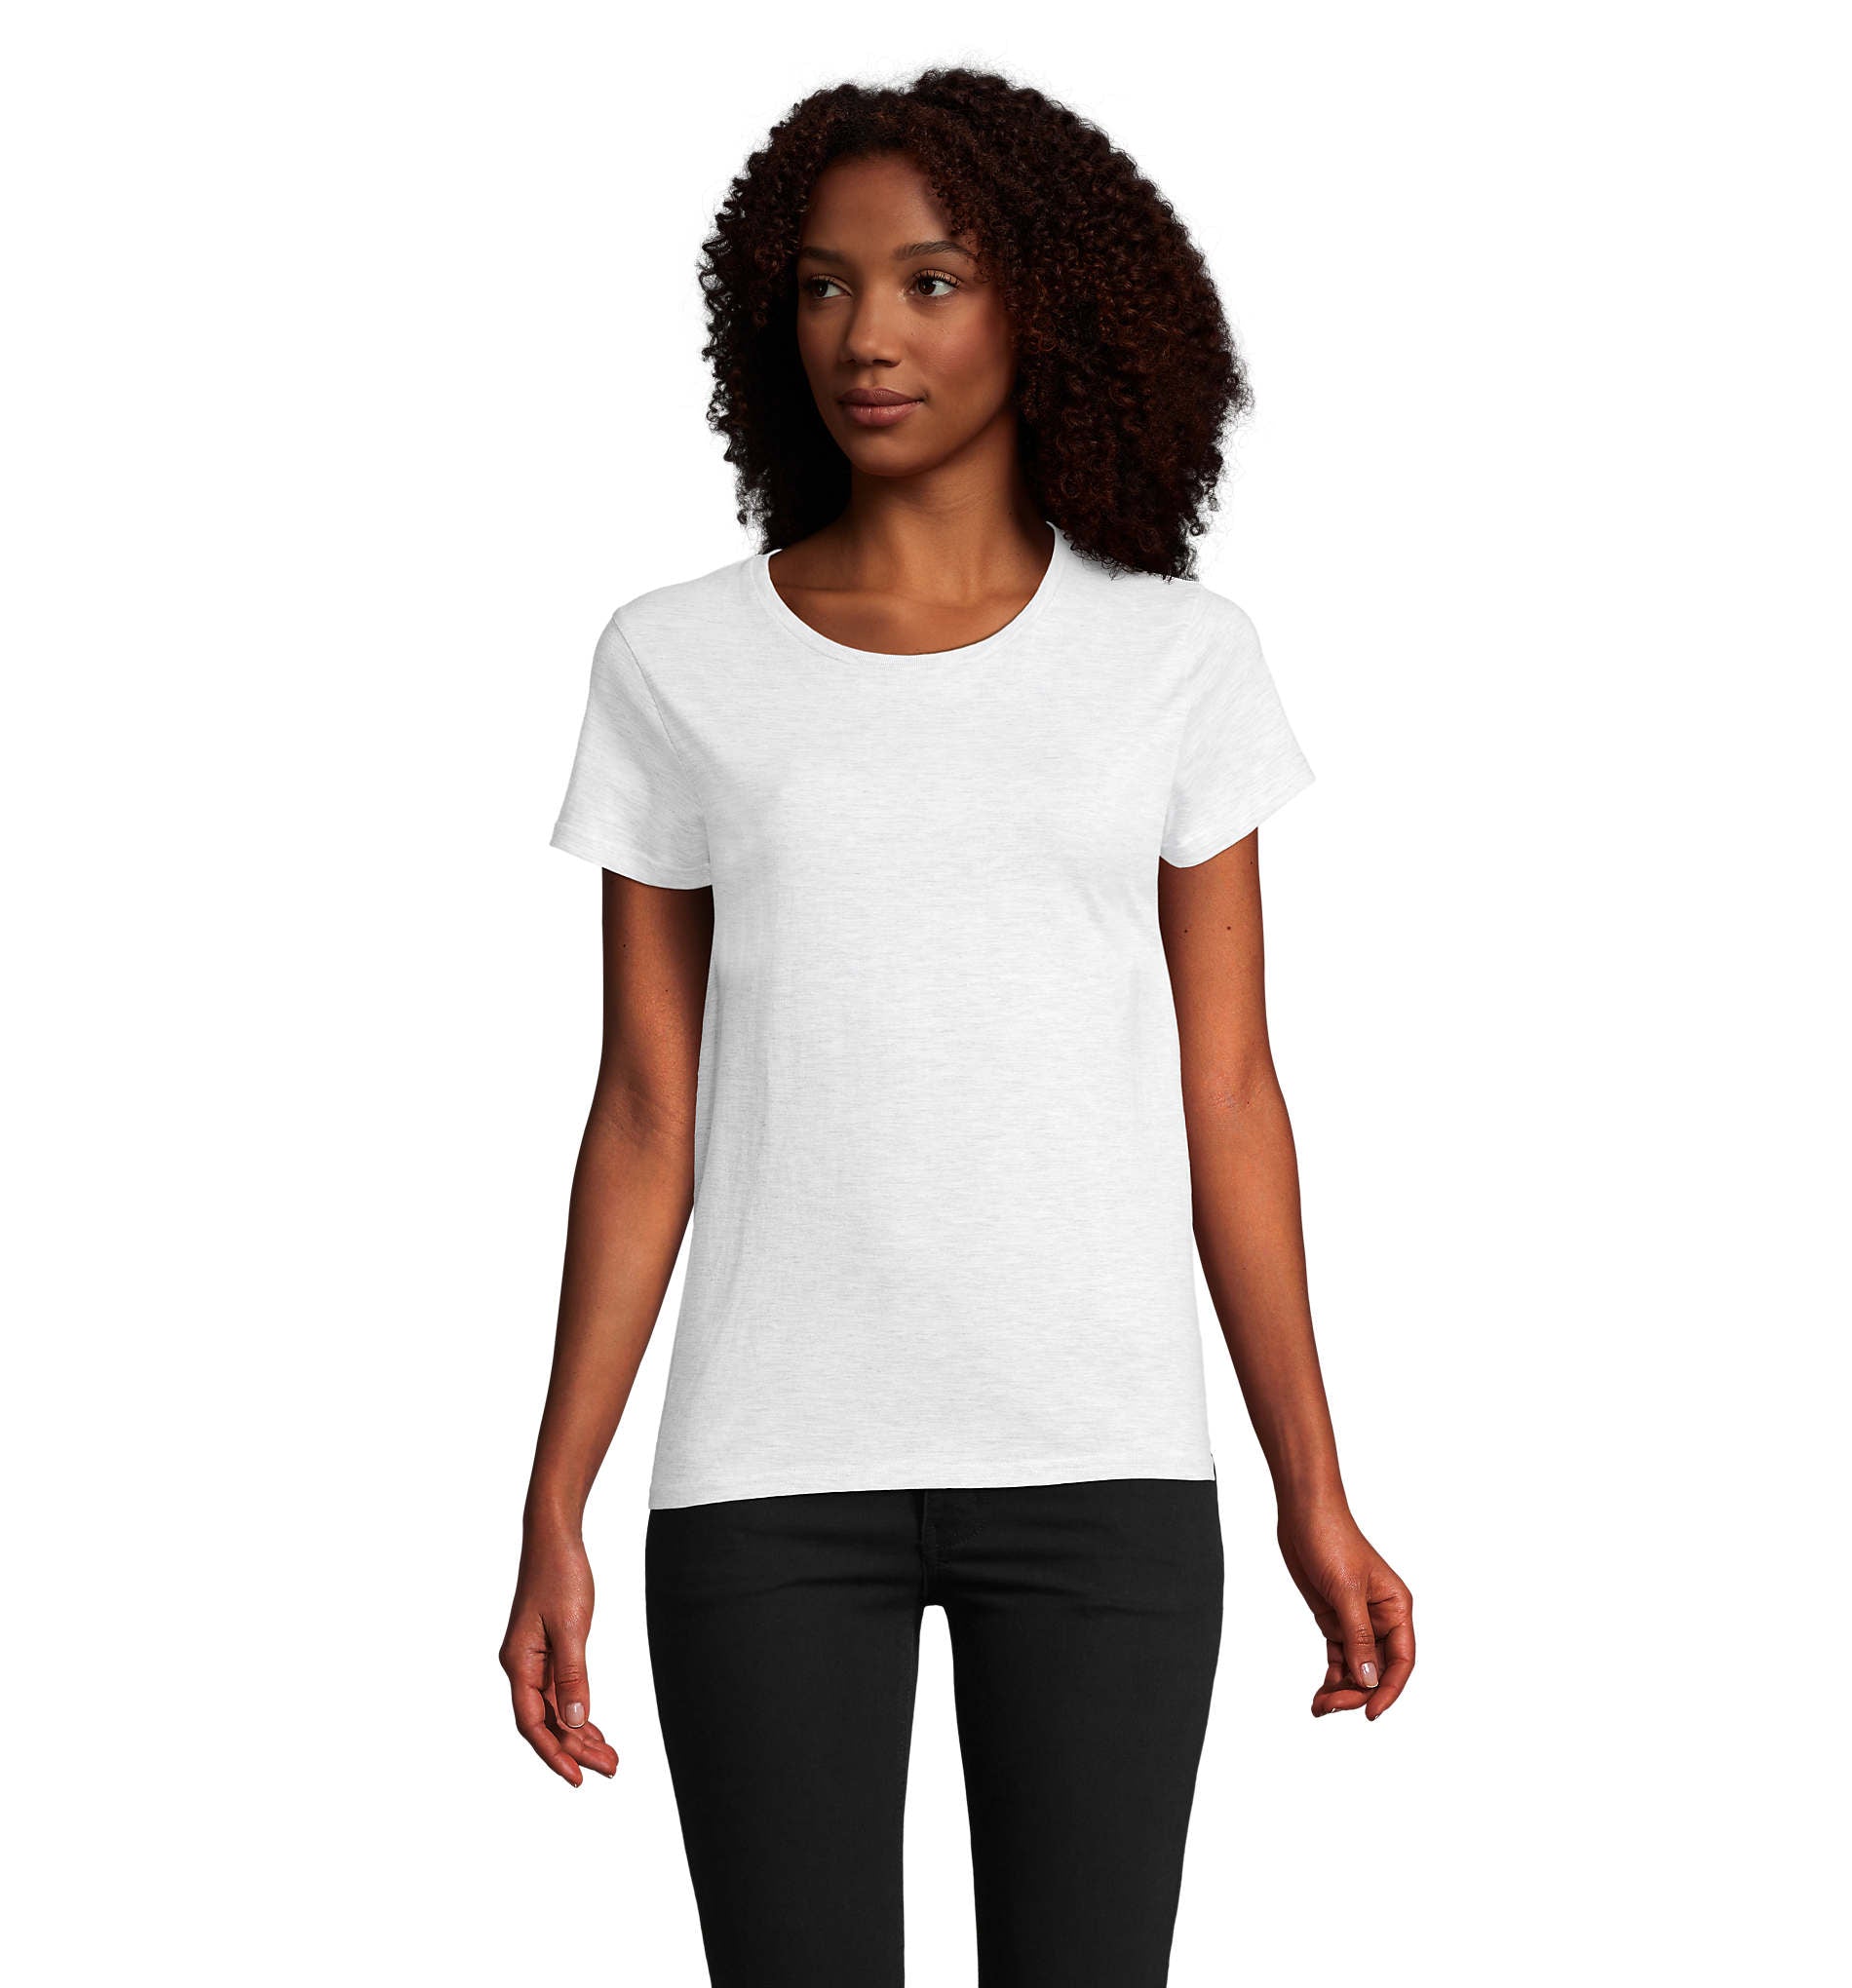 T-shirt mulher jersey de cor branco matizado